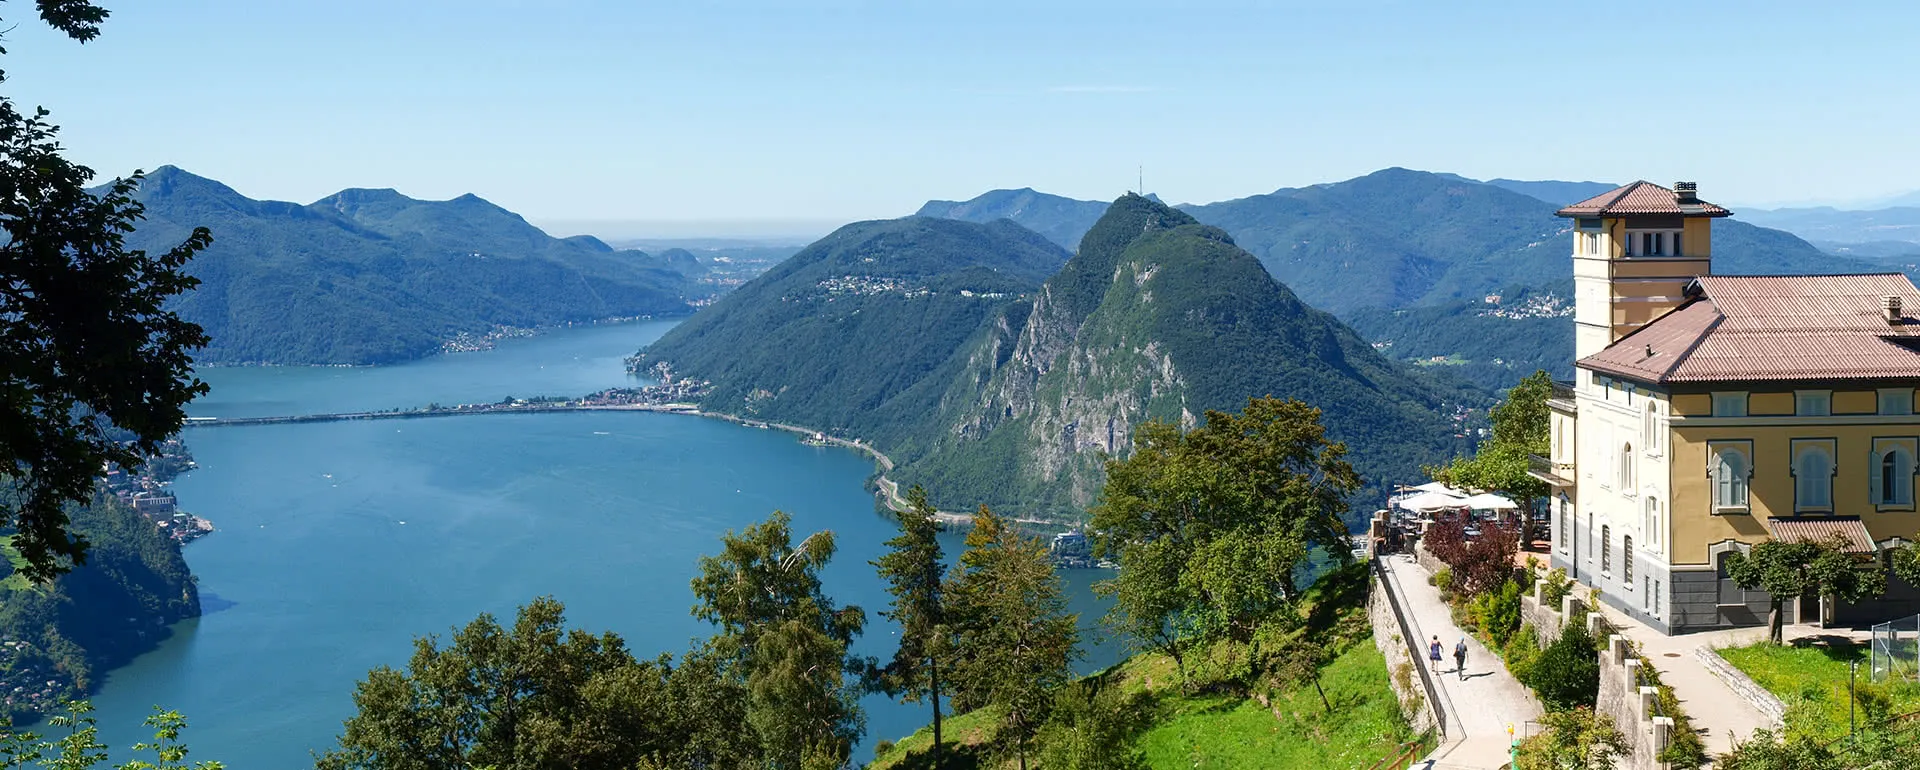 Lugano - the destination for bus trips